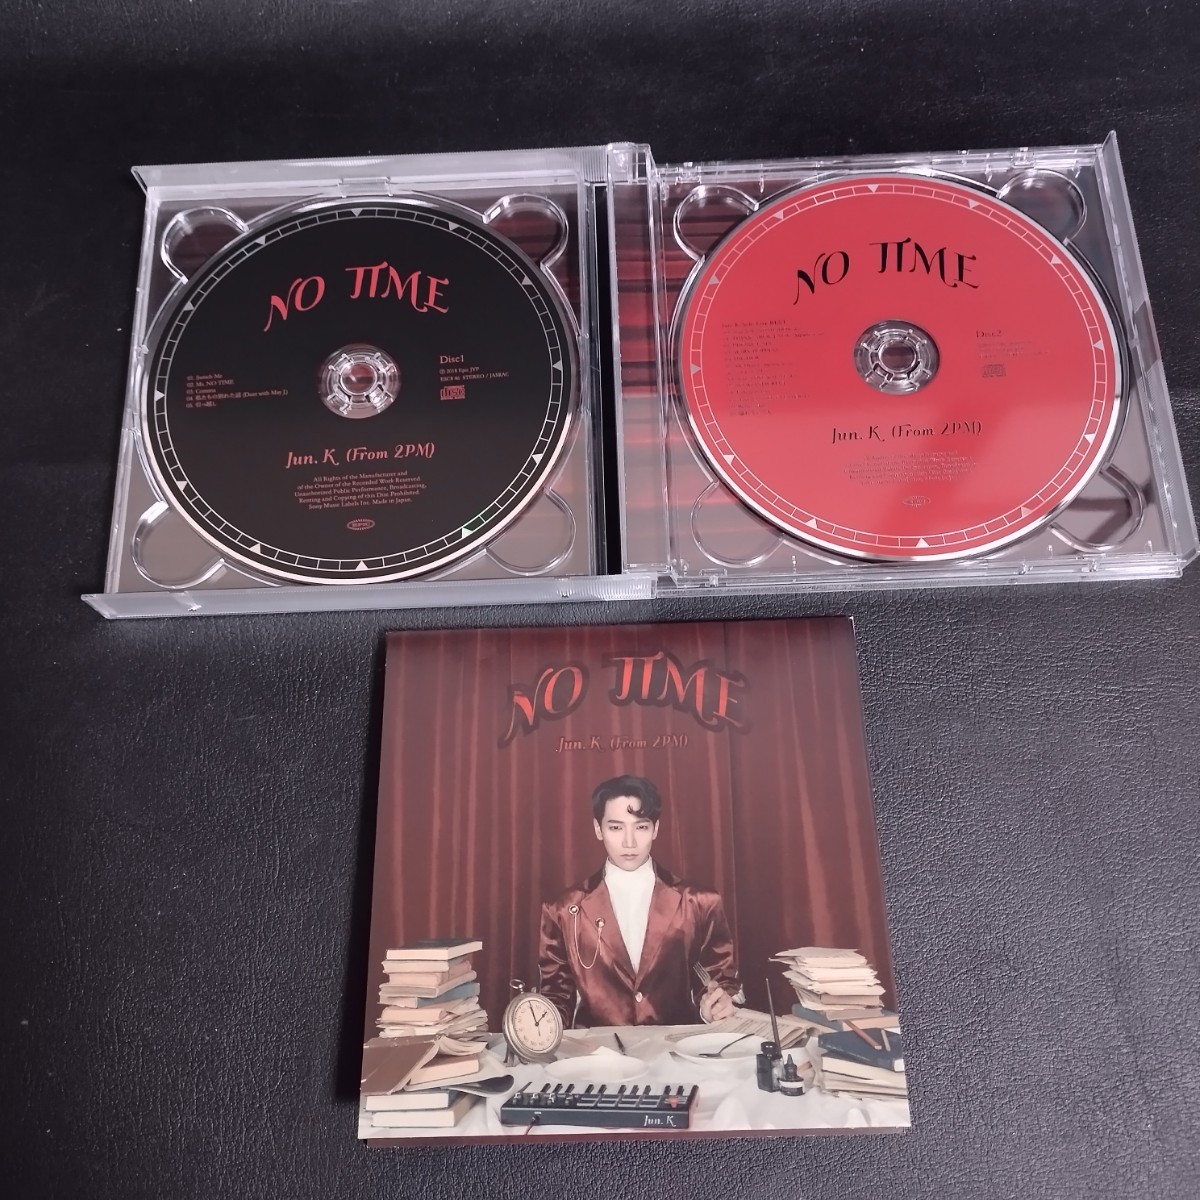 【Jun.K (From 2PM)】 NO TIME[ファンクラブ限定盤] CD2枚組 ポップアップ仕様 歌詞ブックレット付き 2018年_画像3